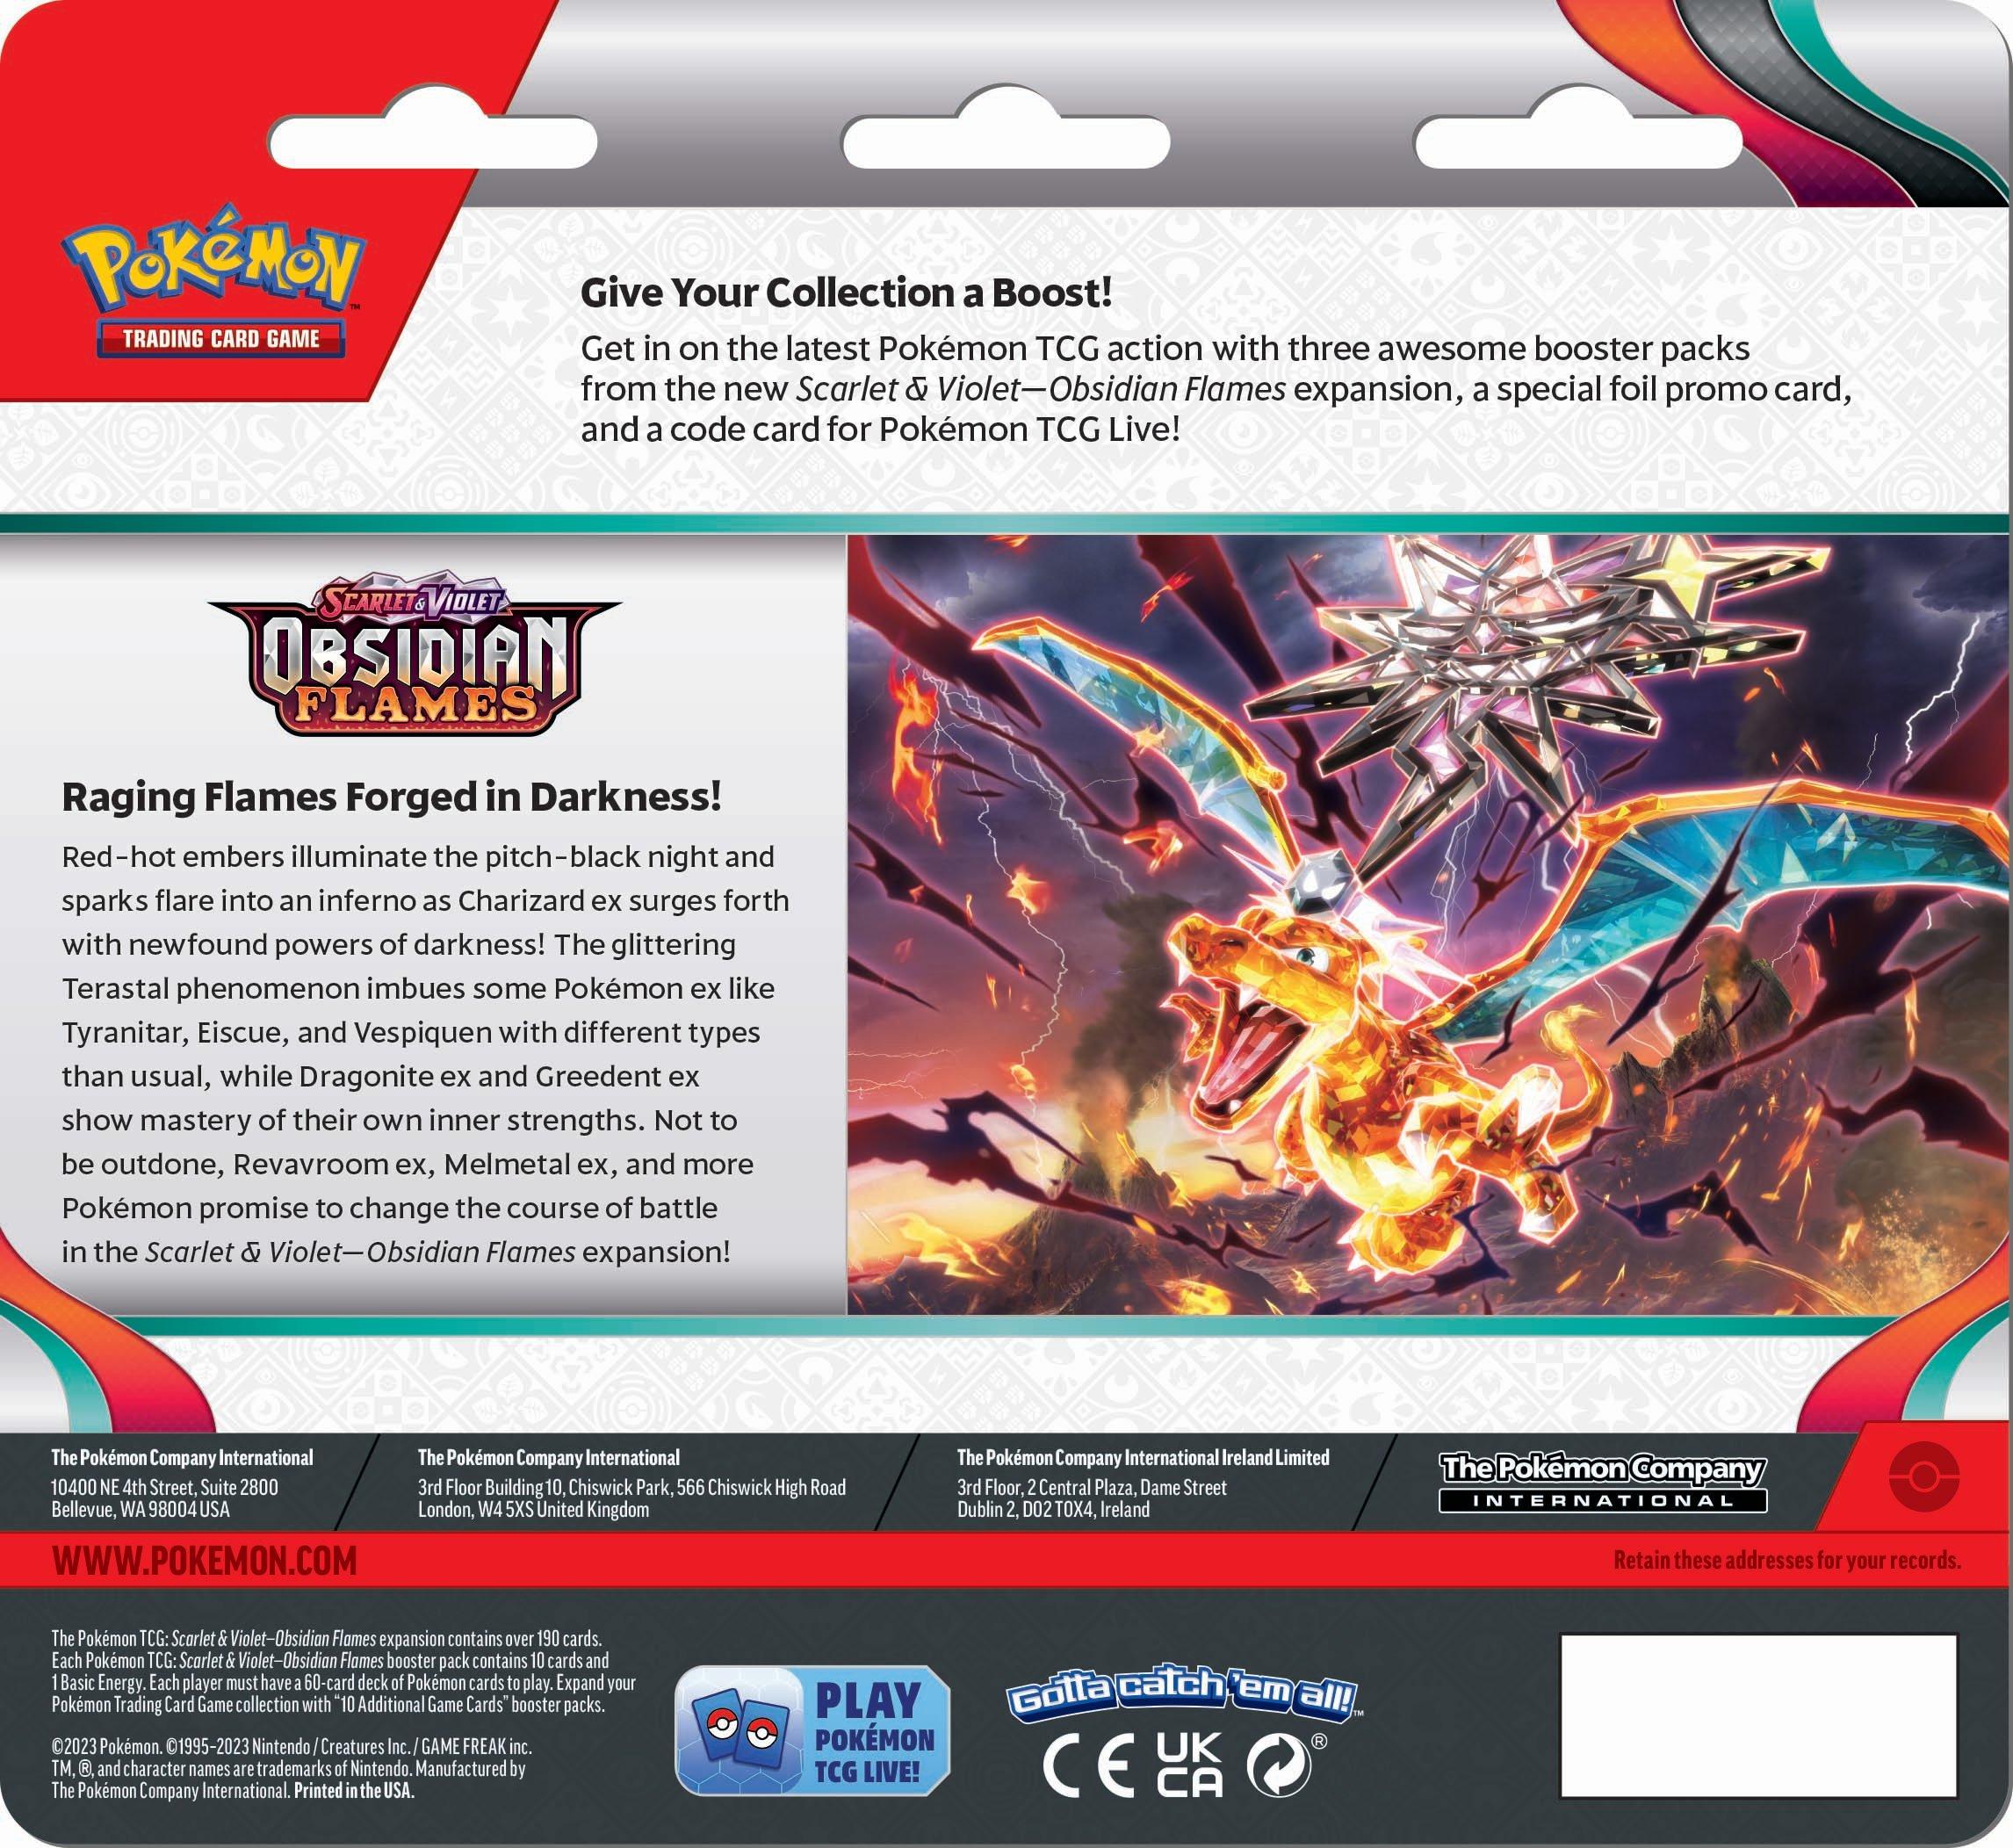 Pokémon Sword & Pokémon by The Pokémon Company International